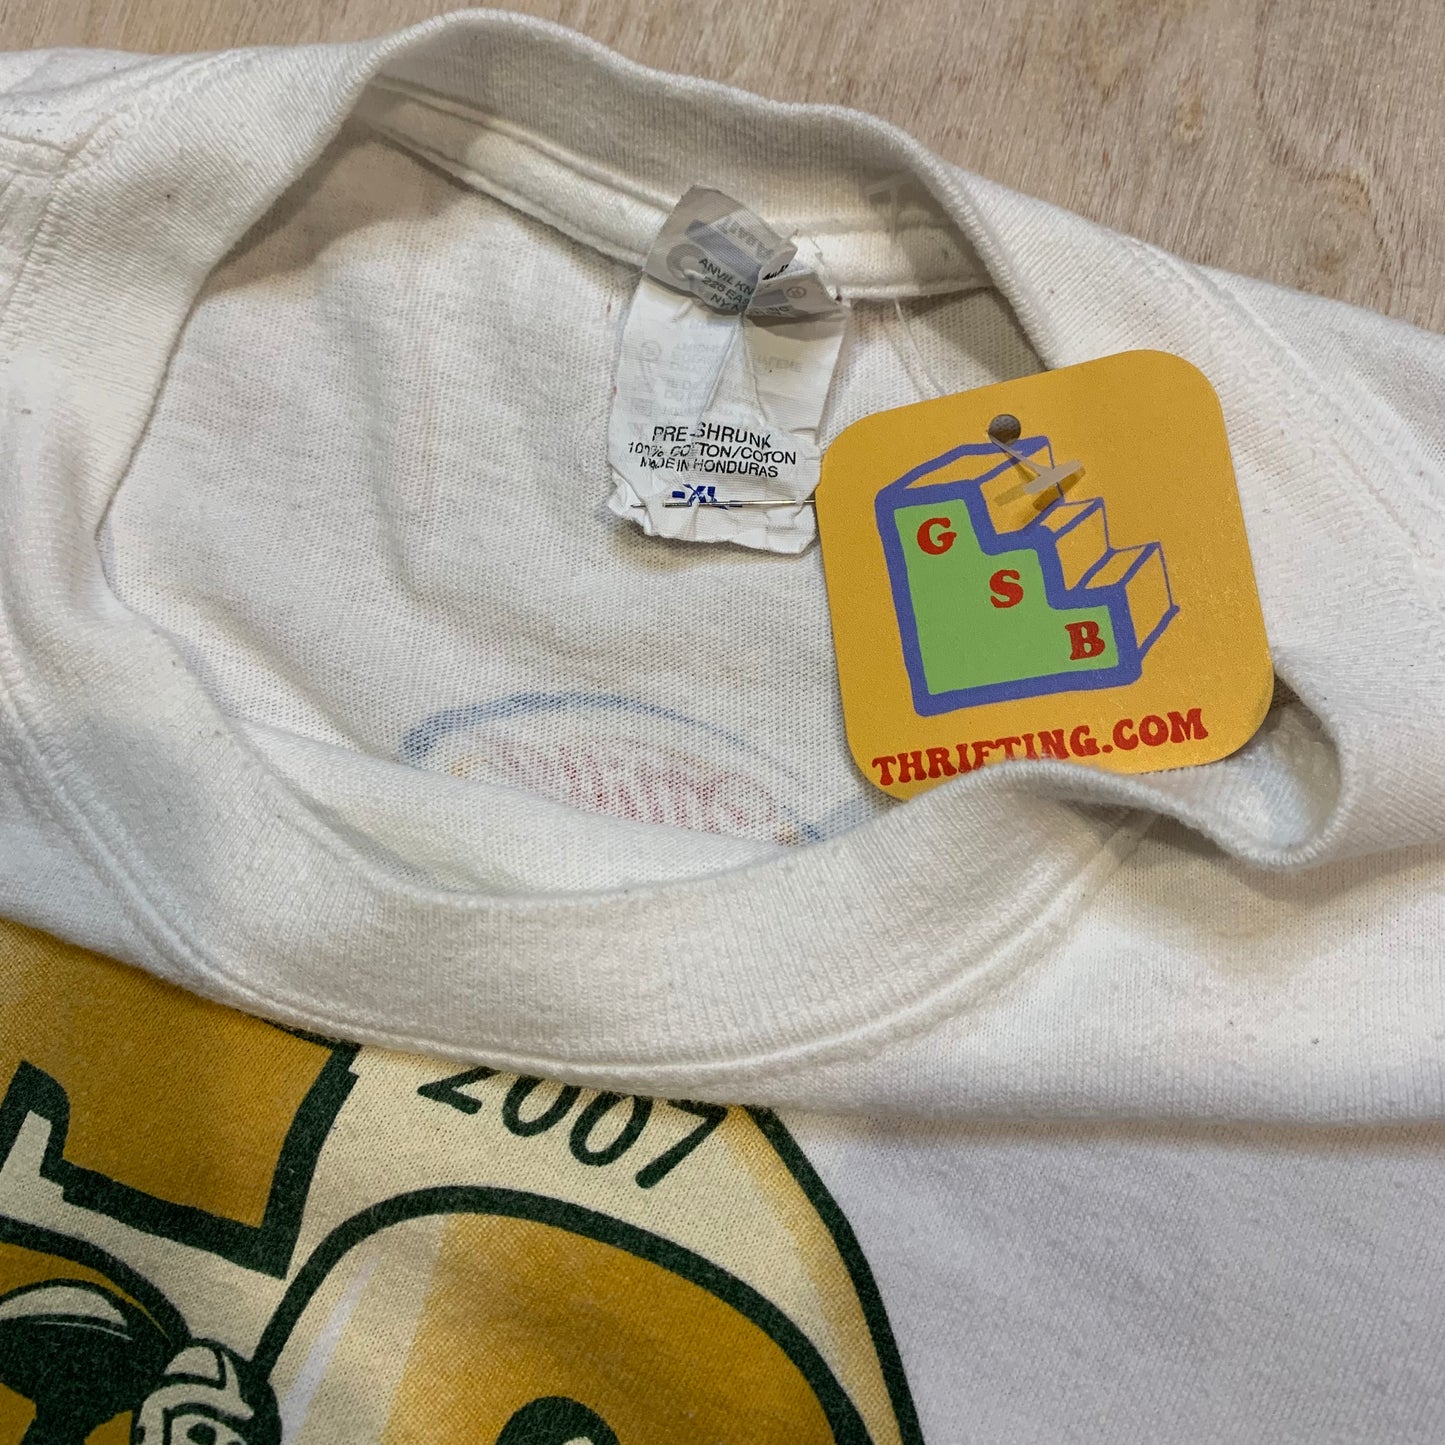 2007 Lambeau Field 50 Year Anniversary T-Shirt